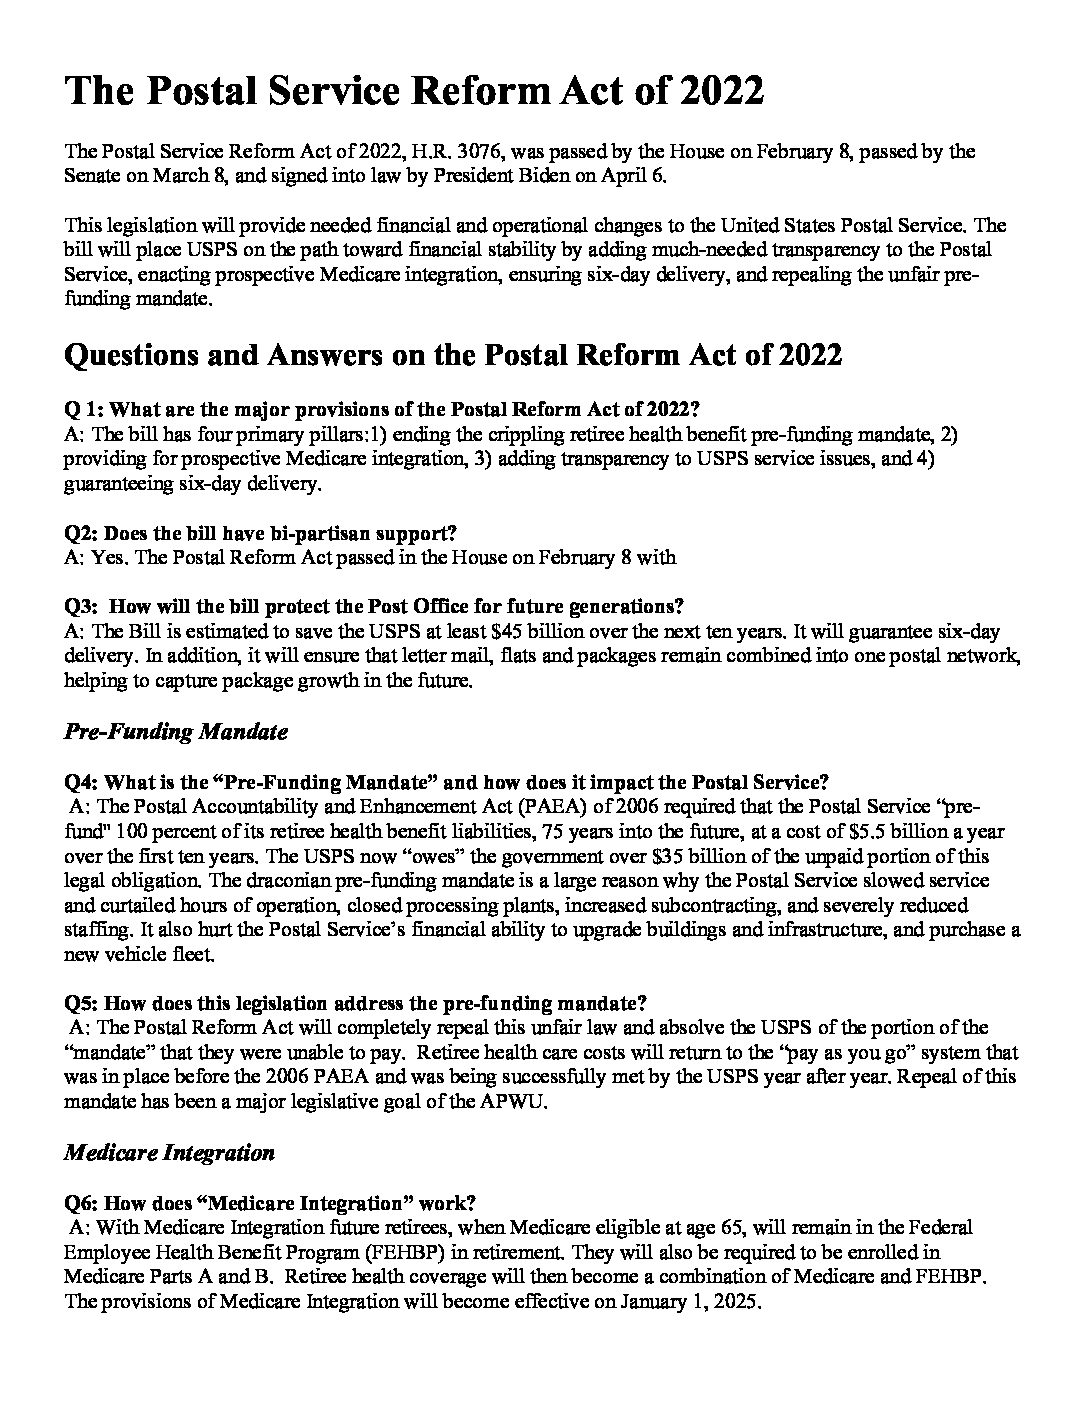 Postal Service Reform Act 2022 - 